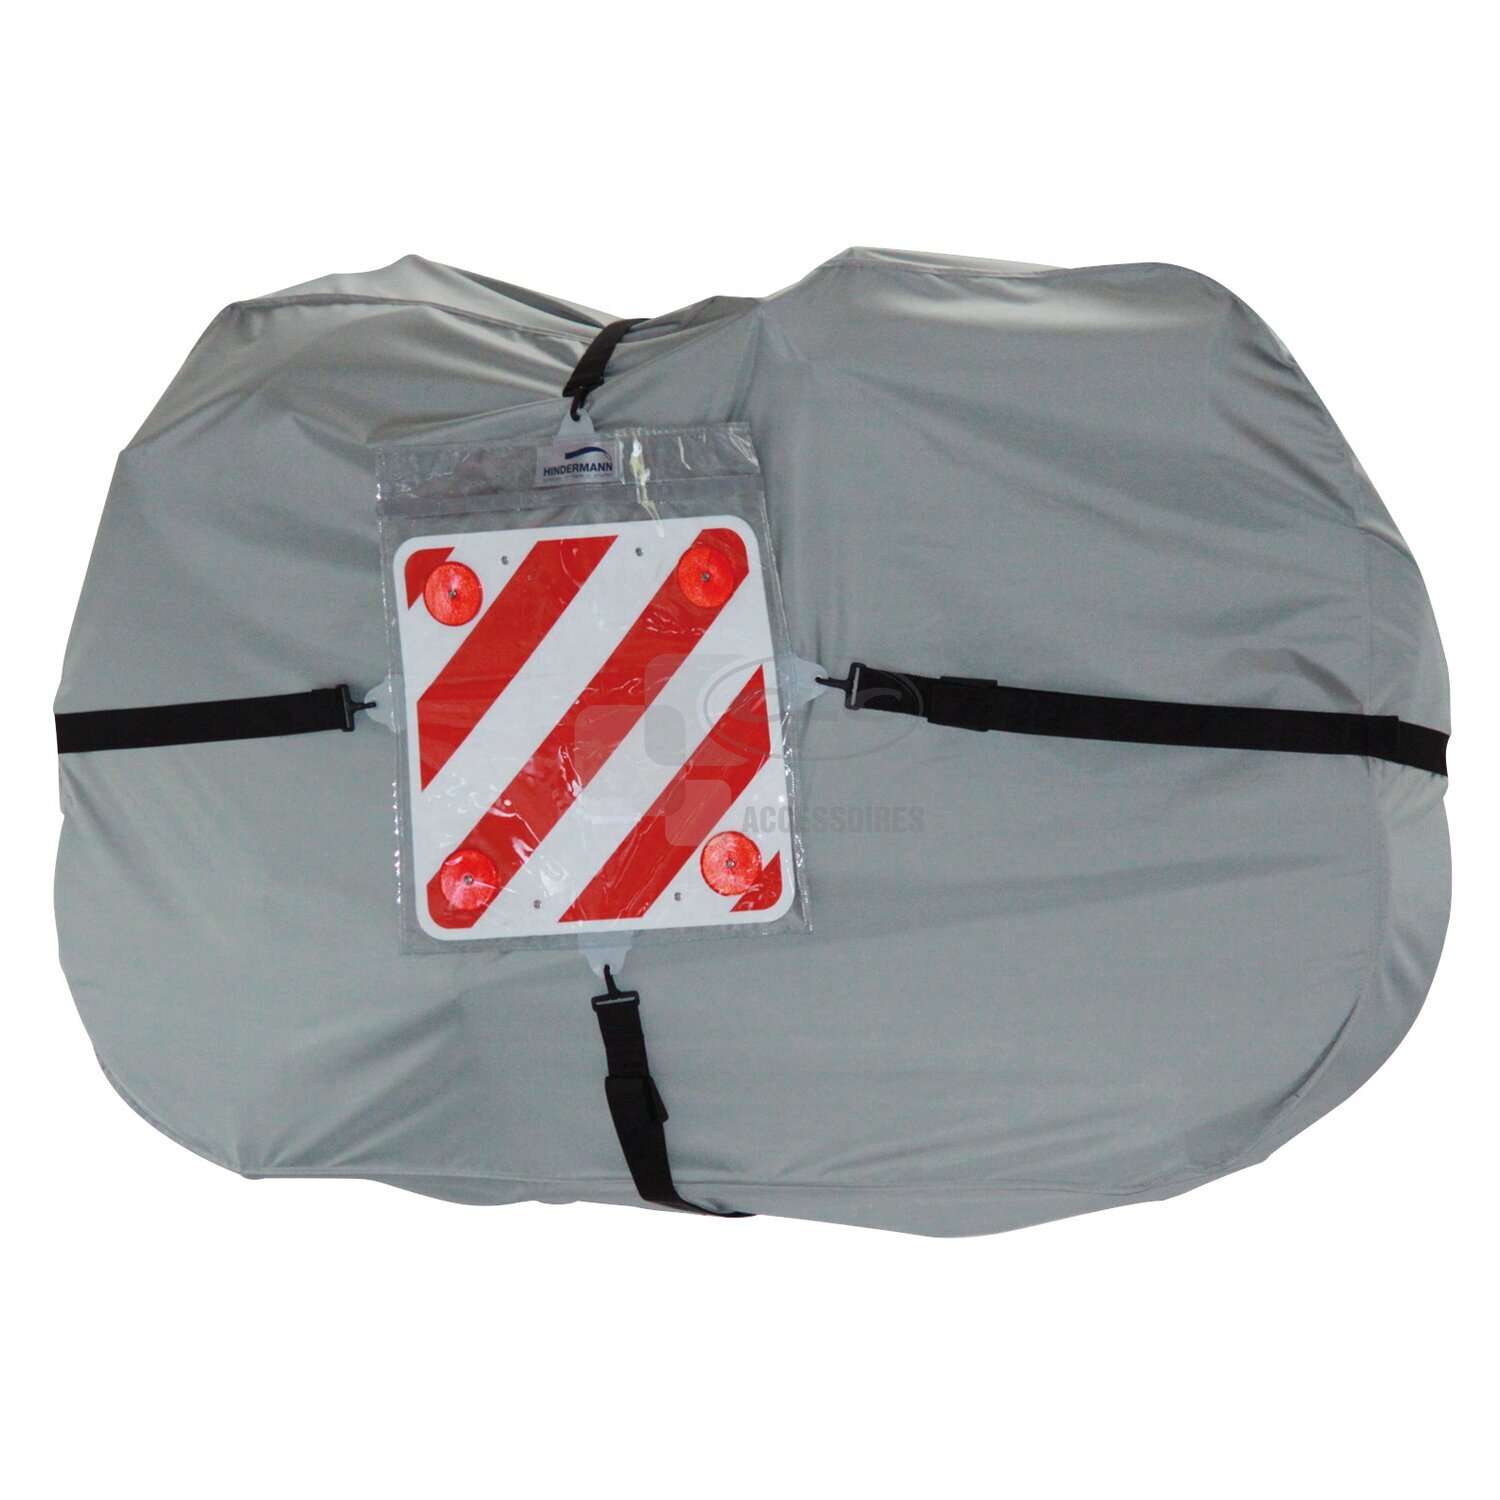 APT Housse de protection pour 2 vélos de camping-car, porte-vélos, pour  porte-hayon, en nylon ripstop